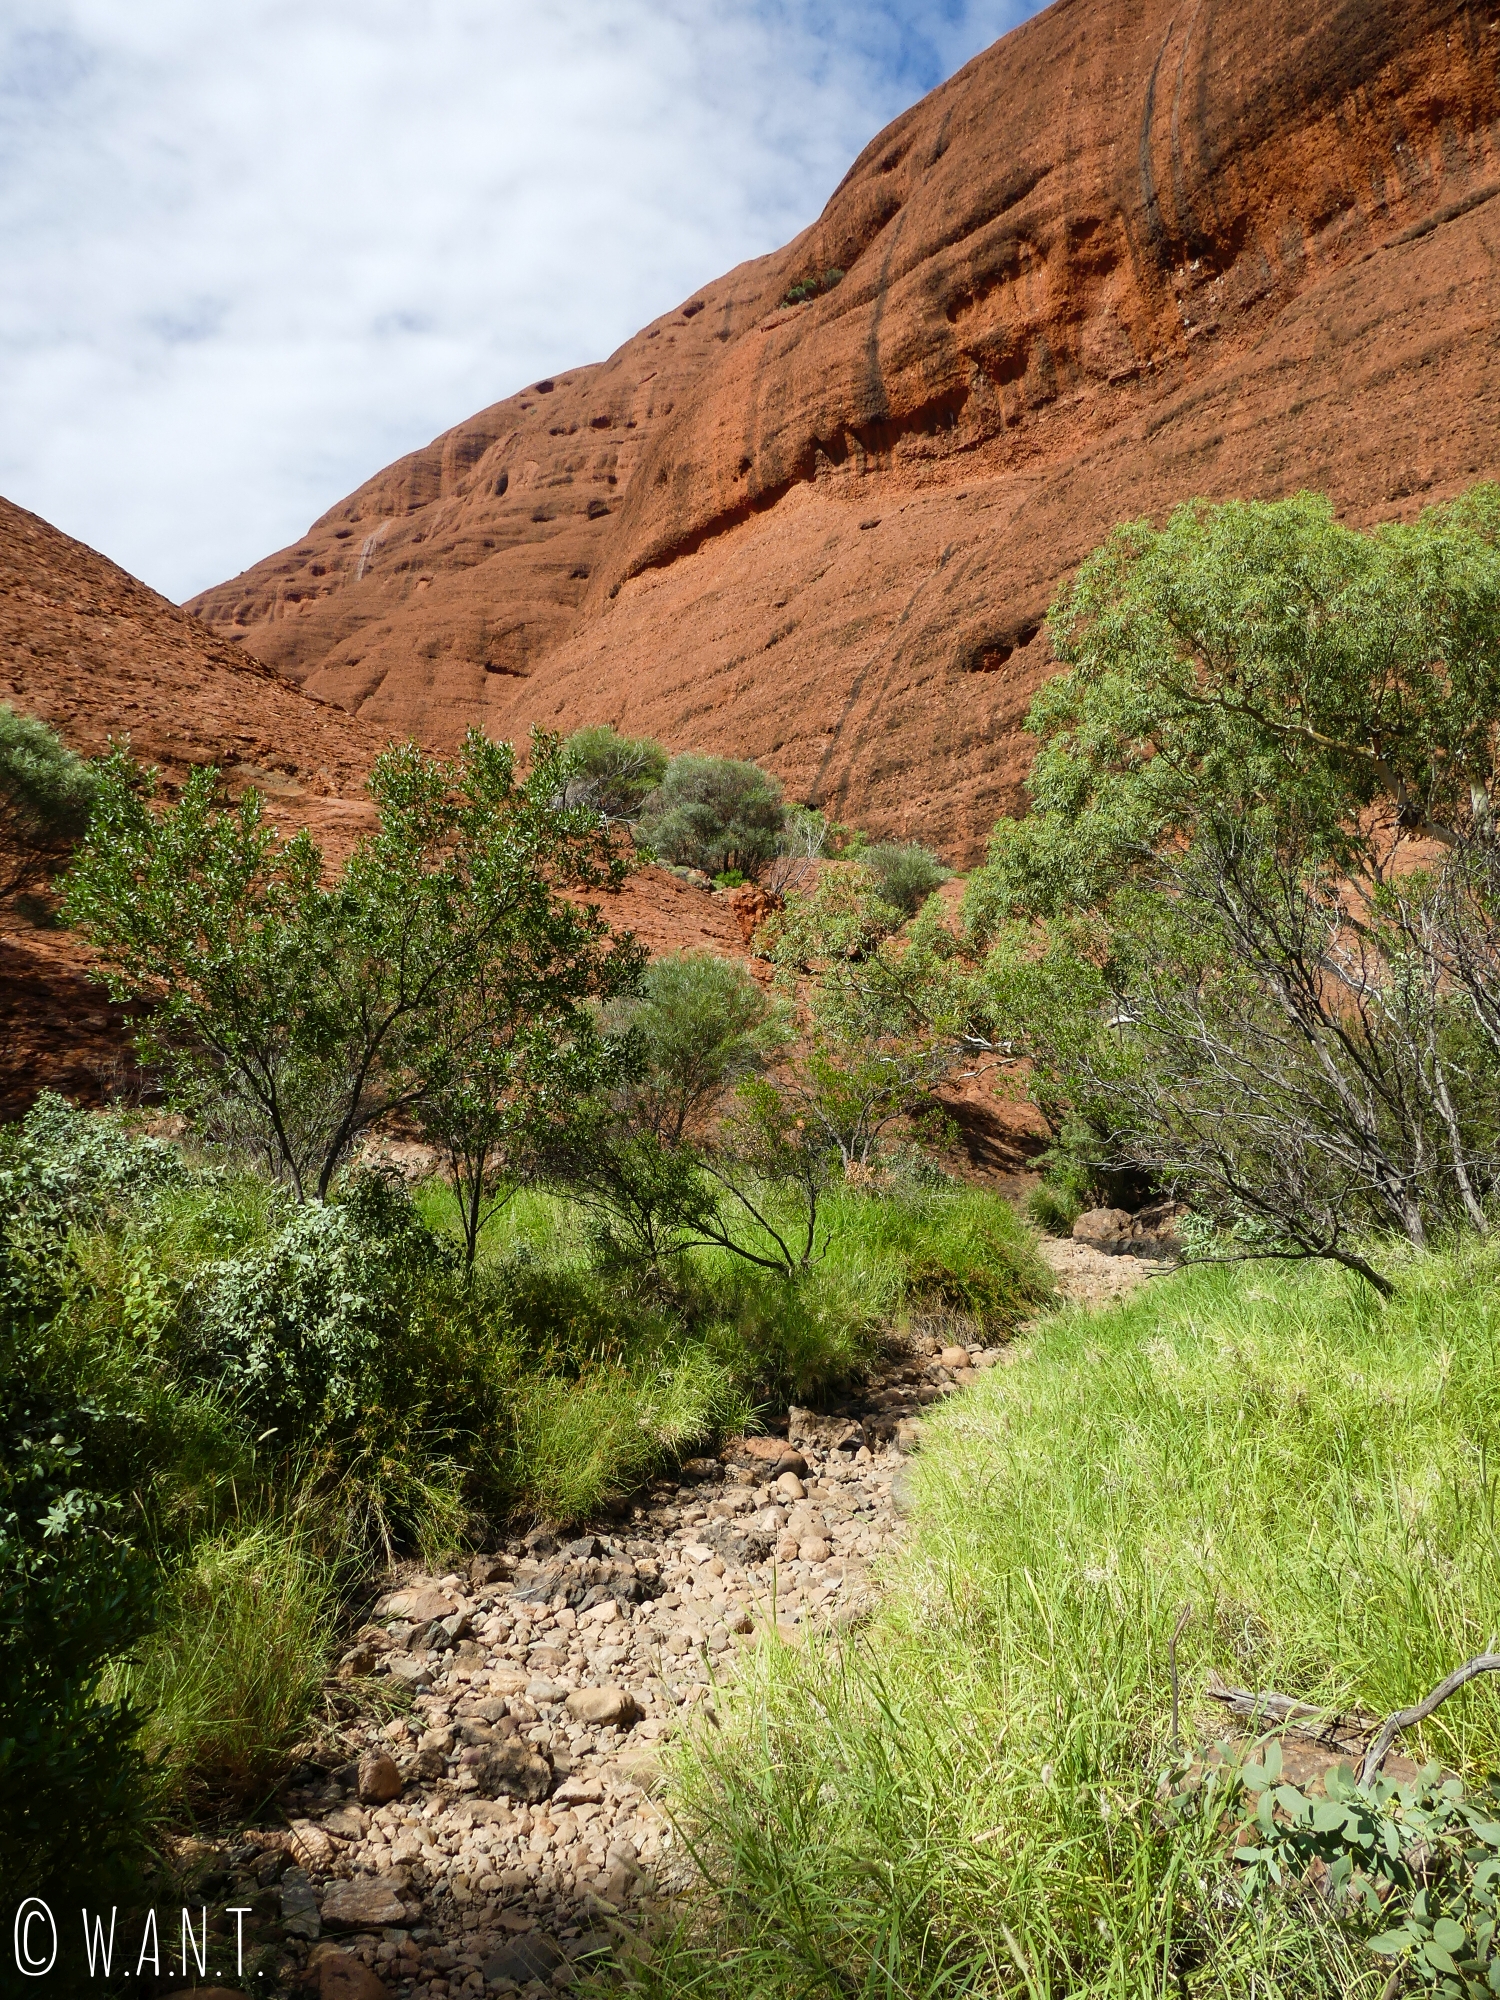 Chemin de la randonnée Valley of the Winds Walk du parc national Uluru-Kata Tjuta